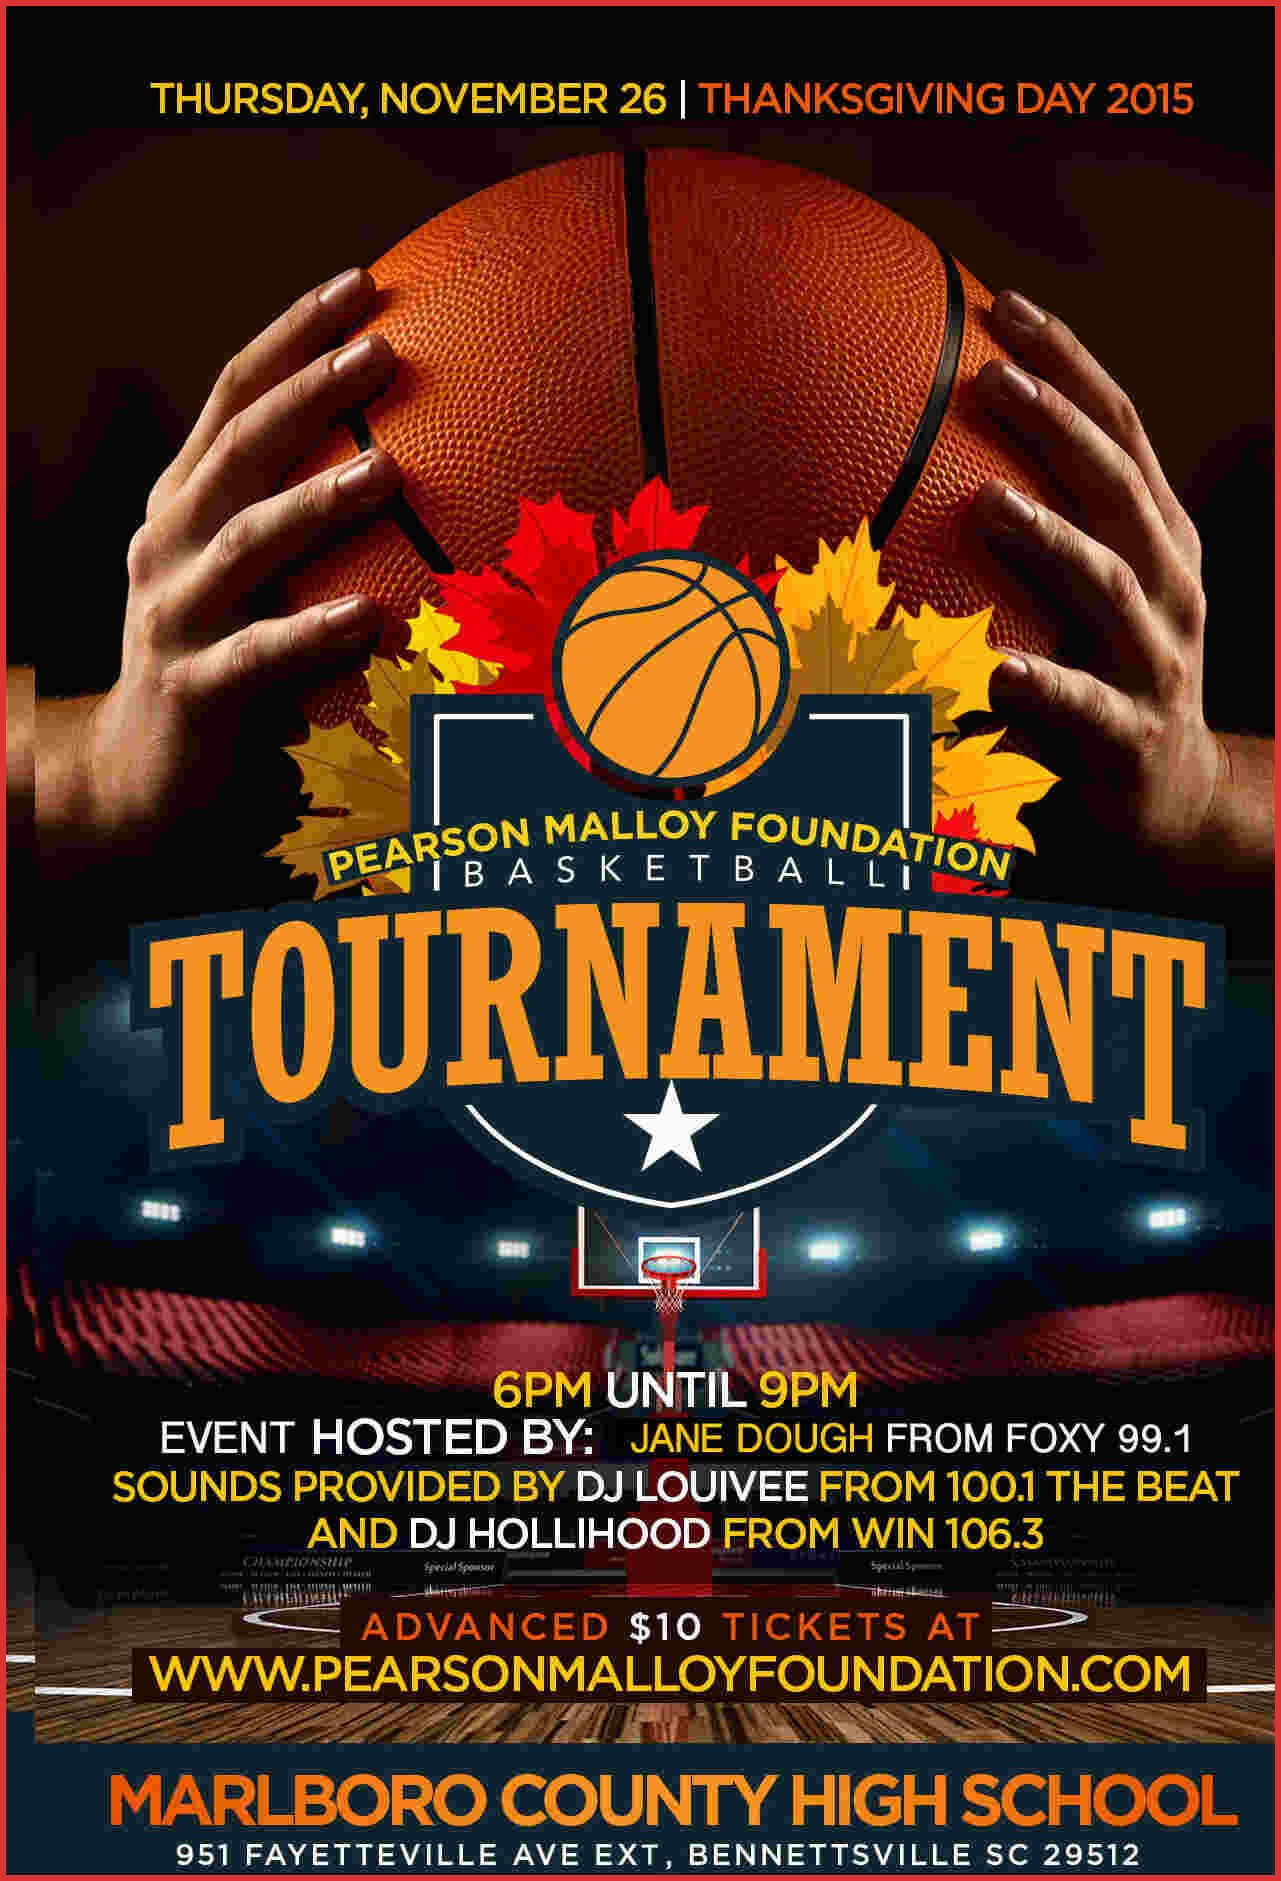 003 Template Ideas On Basketball Tournament Flyer Best Of Throughout 3 On 3 Basketball Tournament Flyer Template